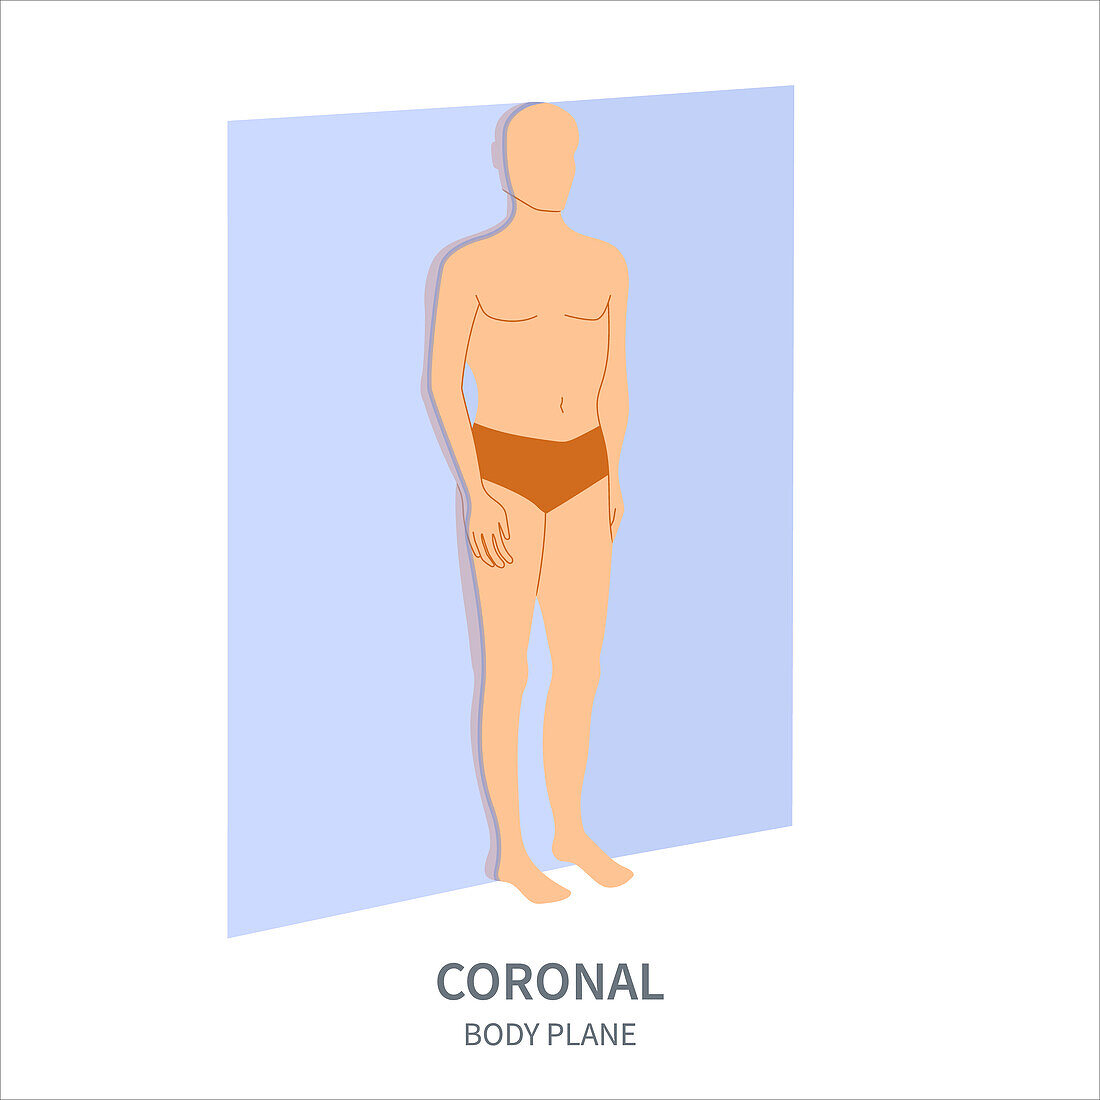 Coronal body plane, illustration